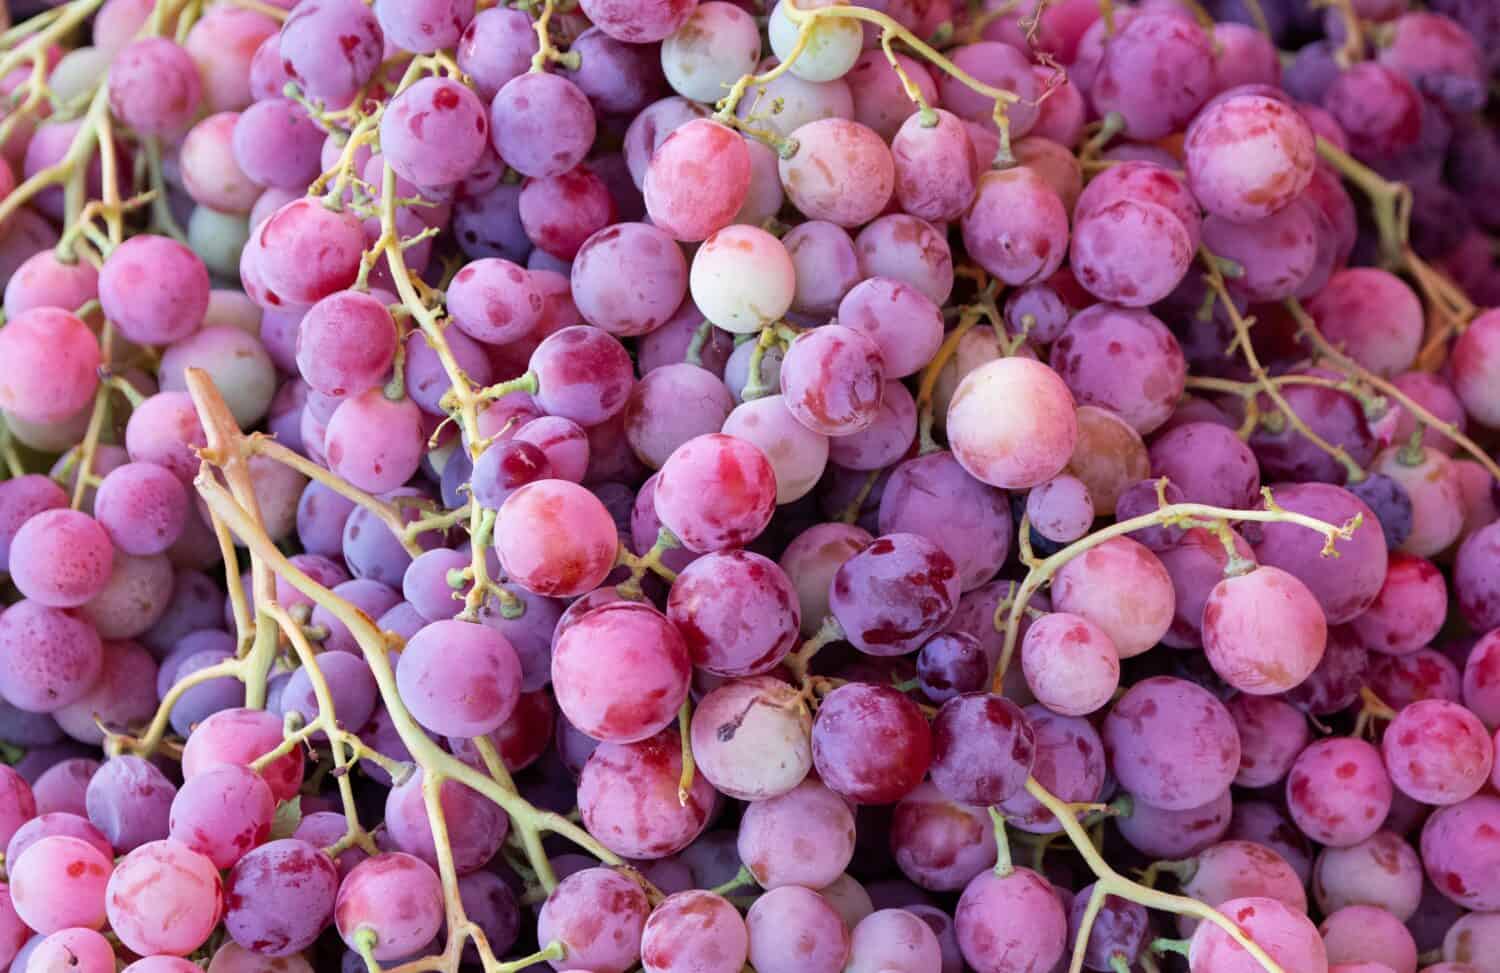 photo of grapes prepared for sale